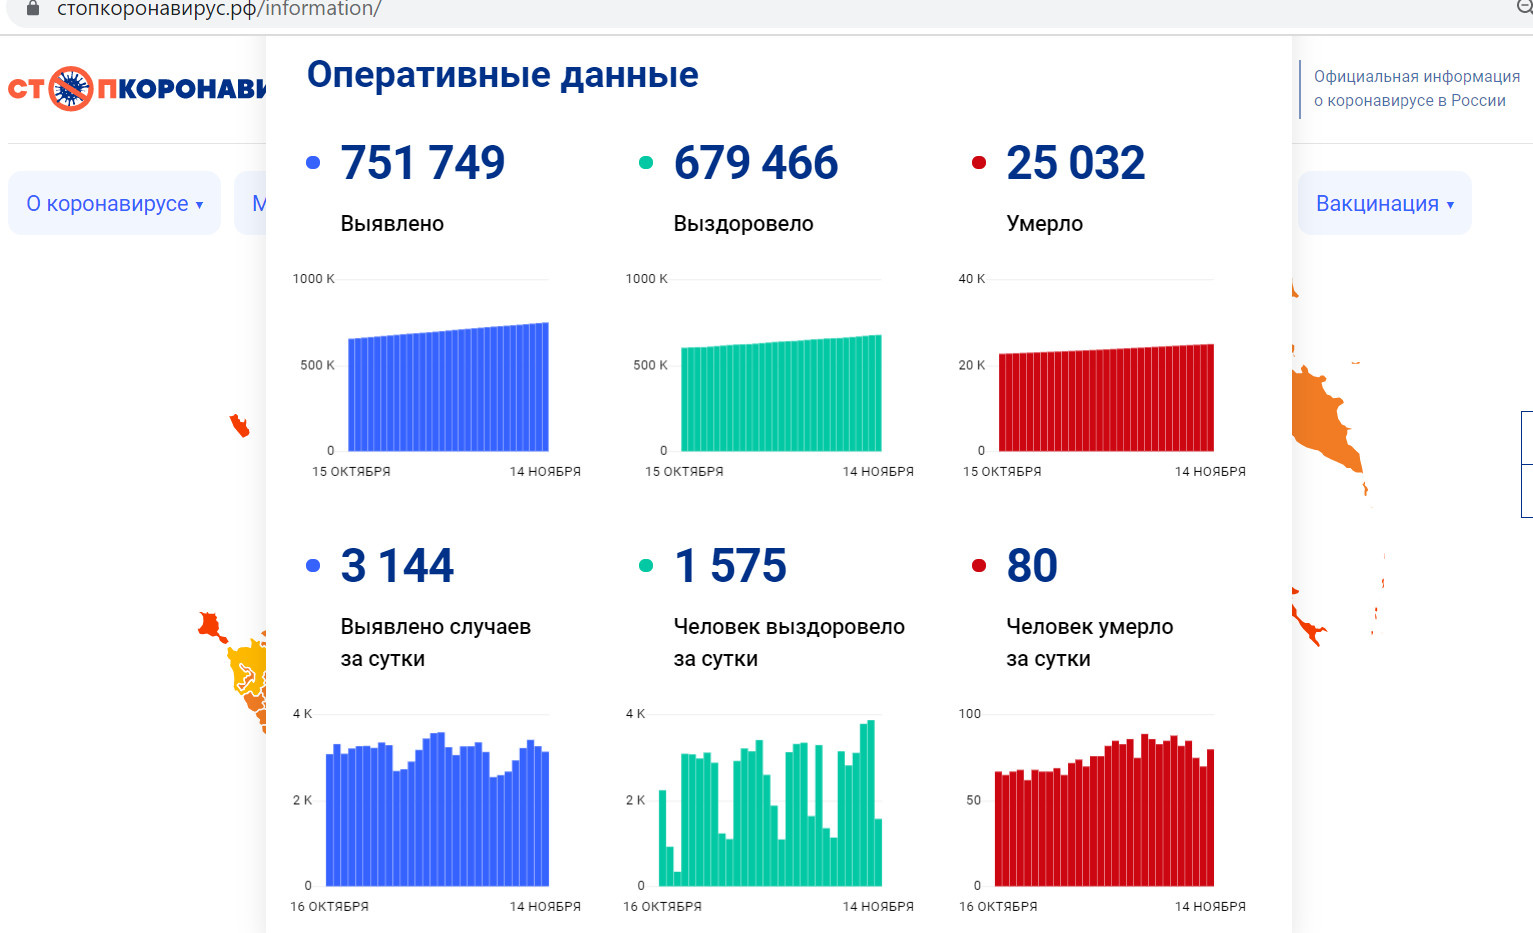 Статистика по Петербургу. Скриншот с сайта «Стопкоронавирус.рф»